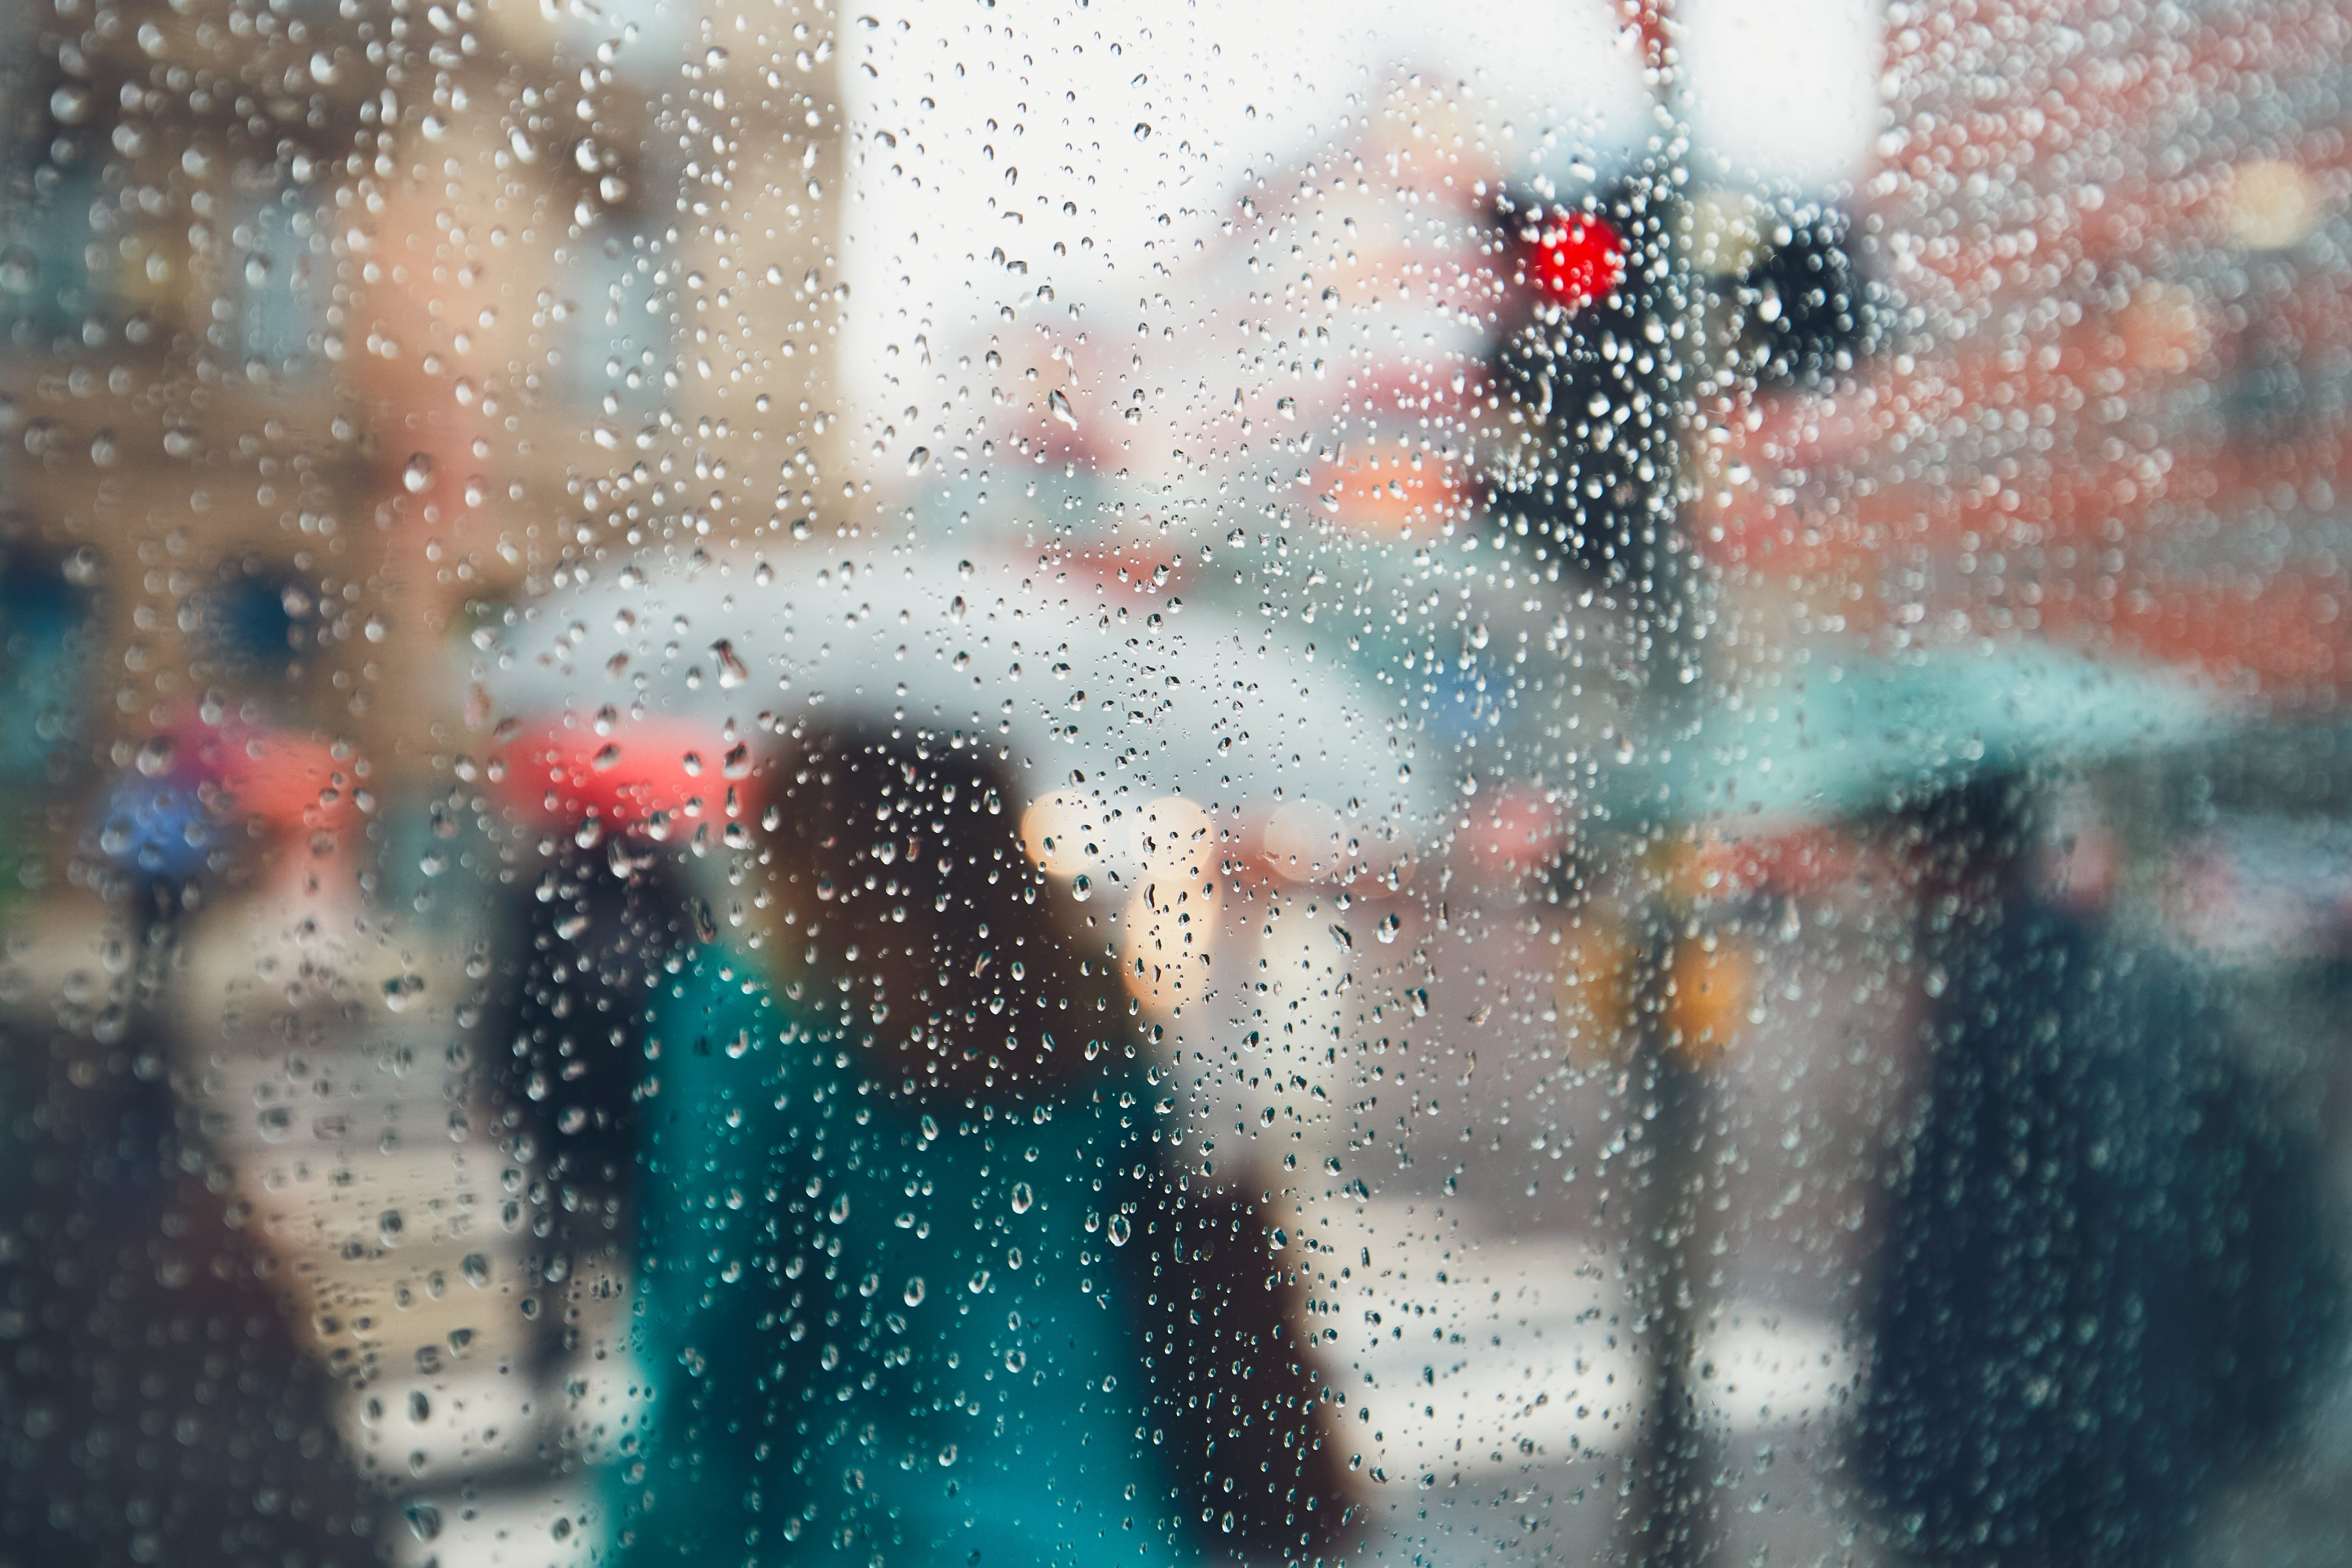 gloomy weather can make depression worse